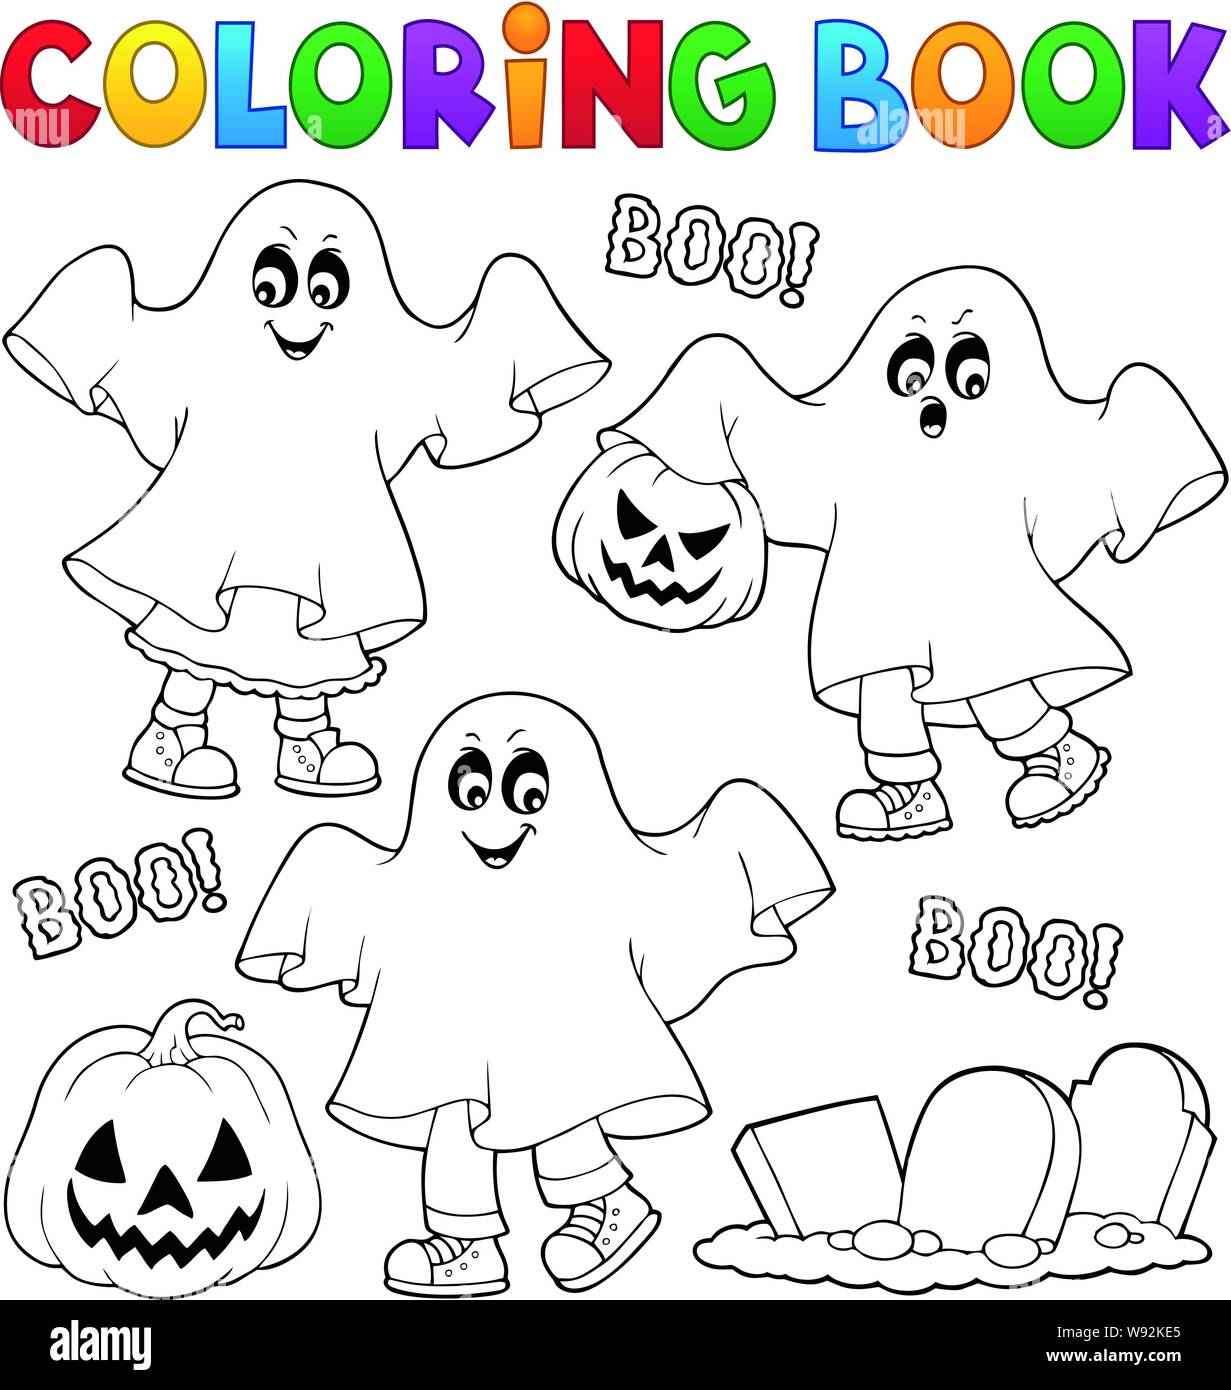 https://c8.alamy.com/comp/W92KE5/coloring-book-kids-in-ghost-costumes-1-eps10-vector-illustration-W92KE5.jpg